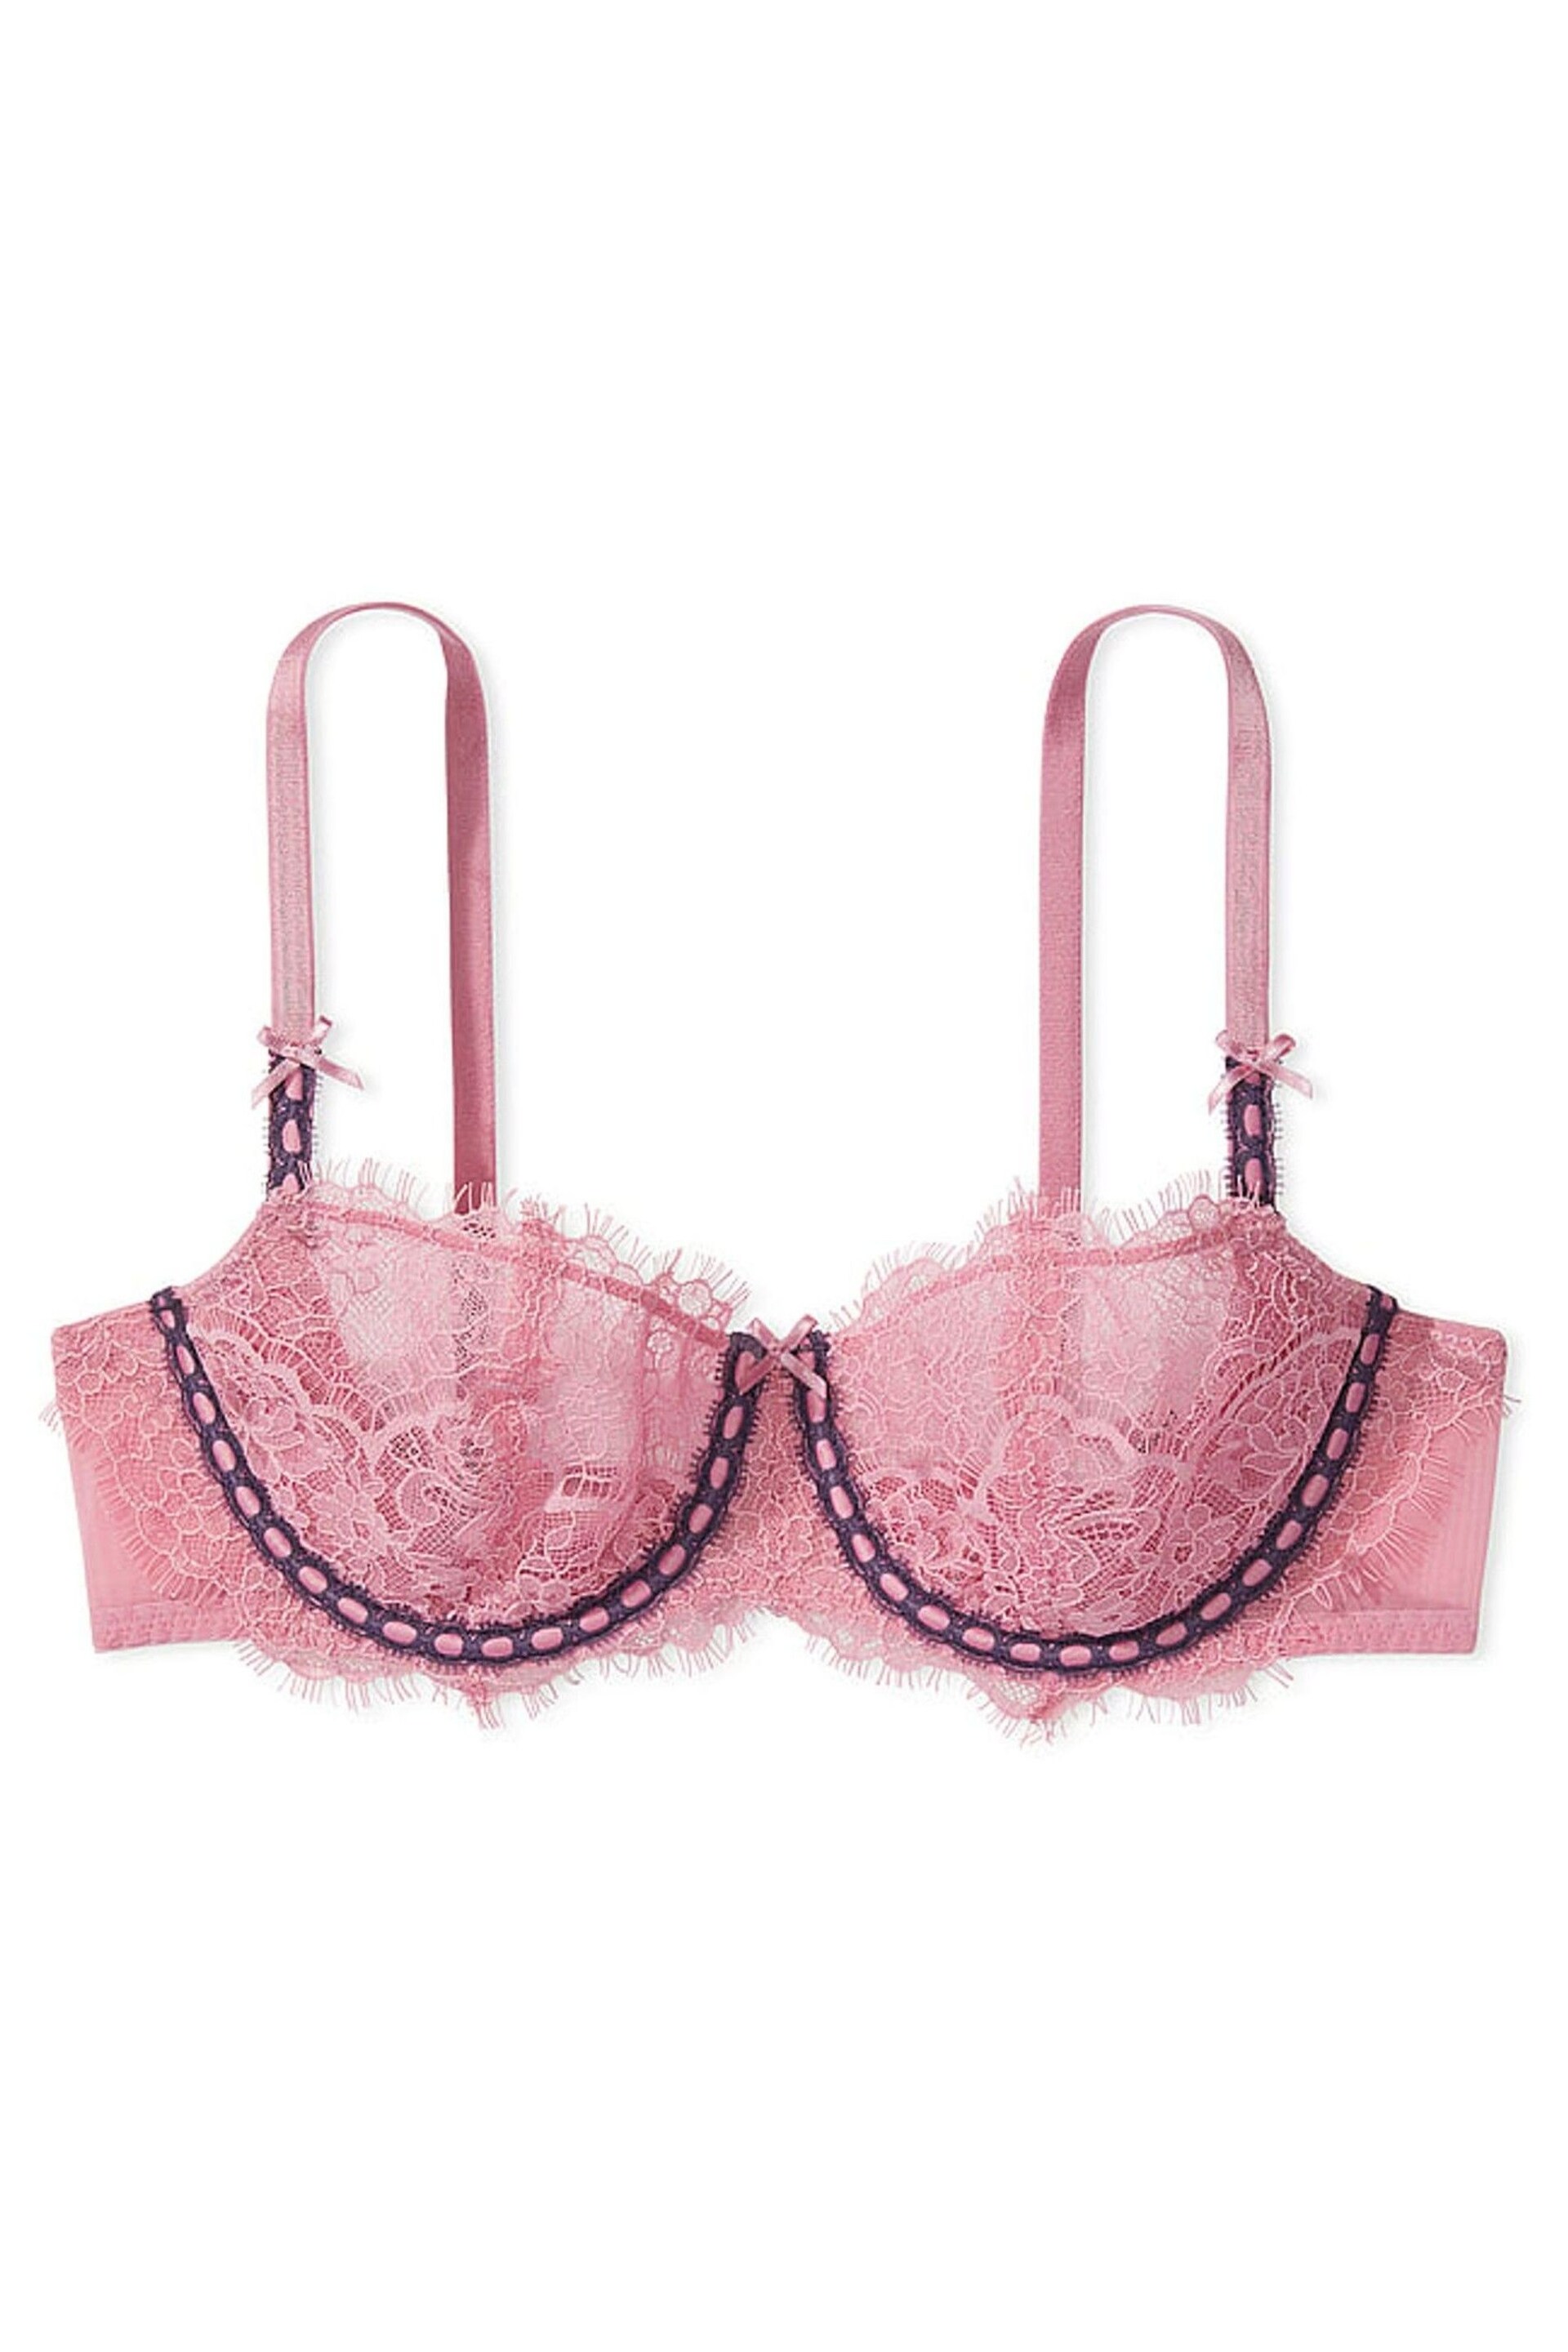 Victoria's Secret Dusk Mauve Pink Ribbon Slot Unlined Balcony Bra - Image 3 of 4